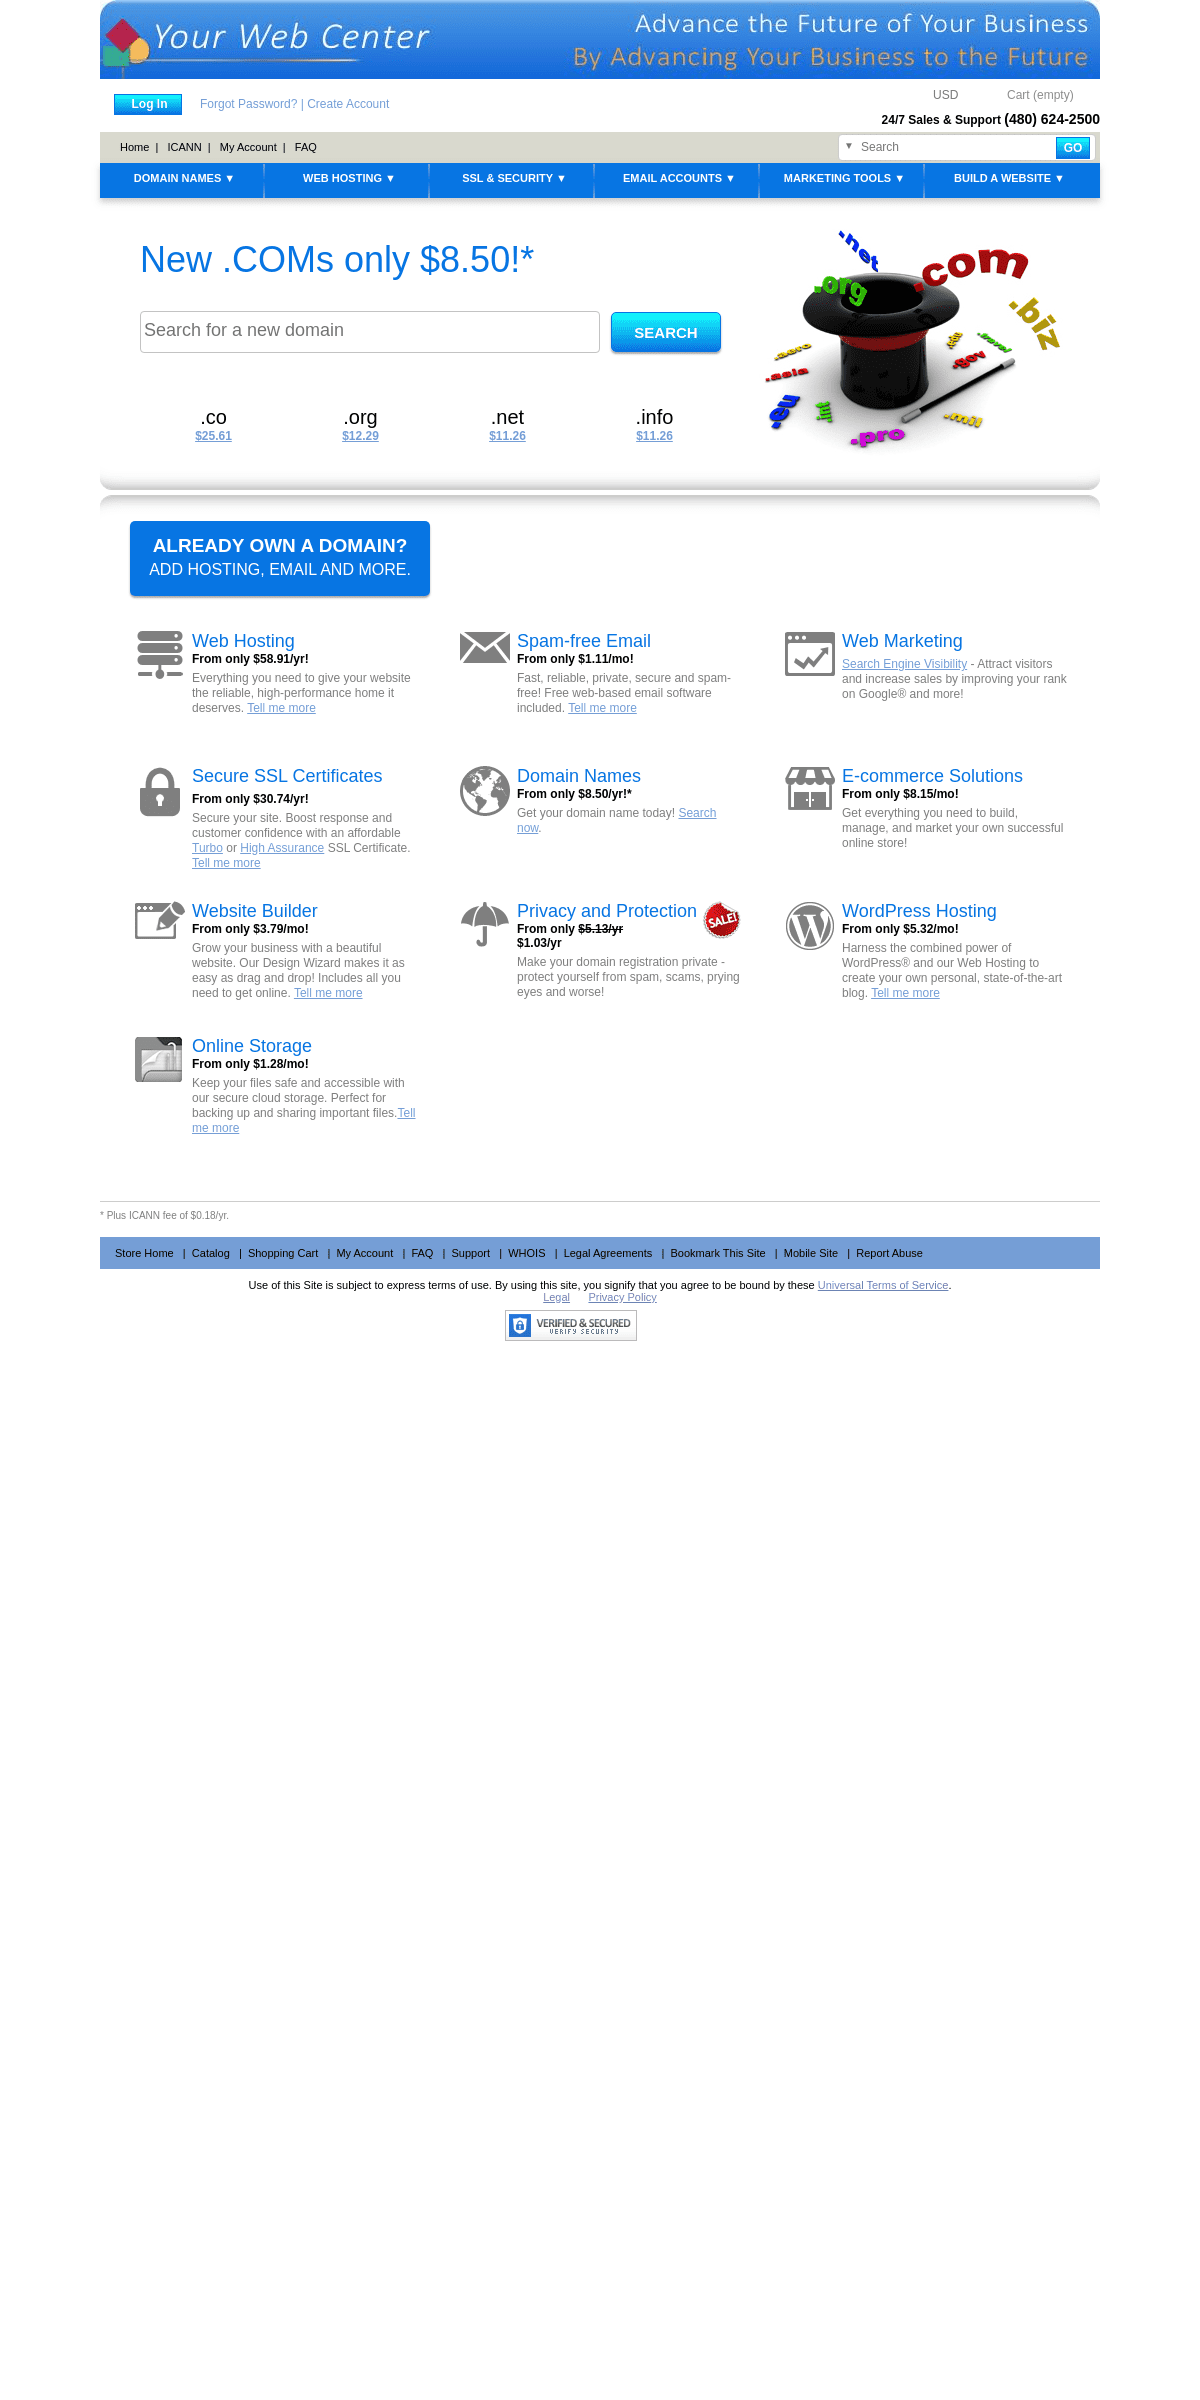 A complete backup of yourwebcenter.com